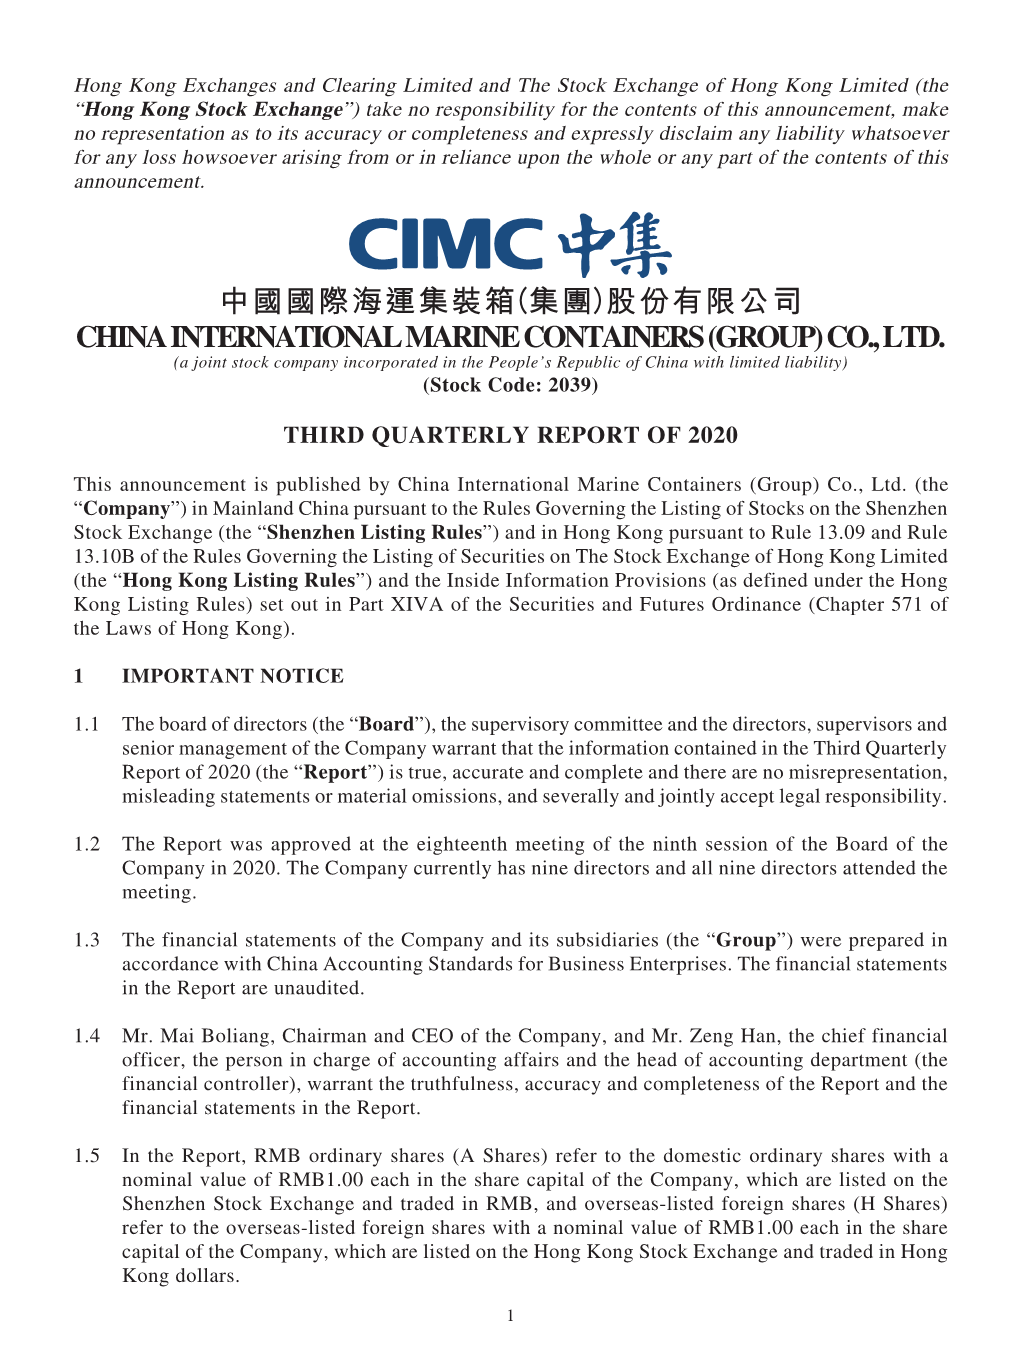 股份有限公司 China International Marine Containers (Group) Co., Ltd